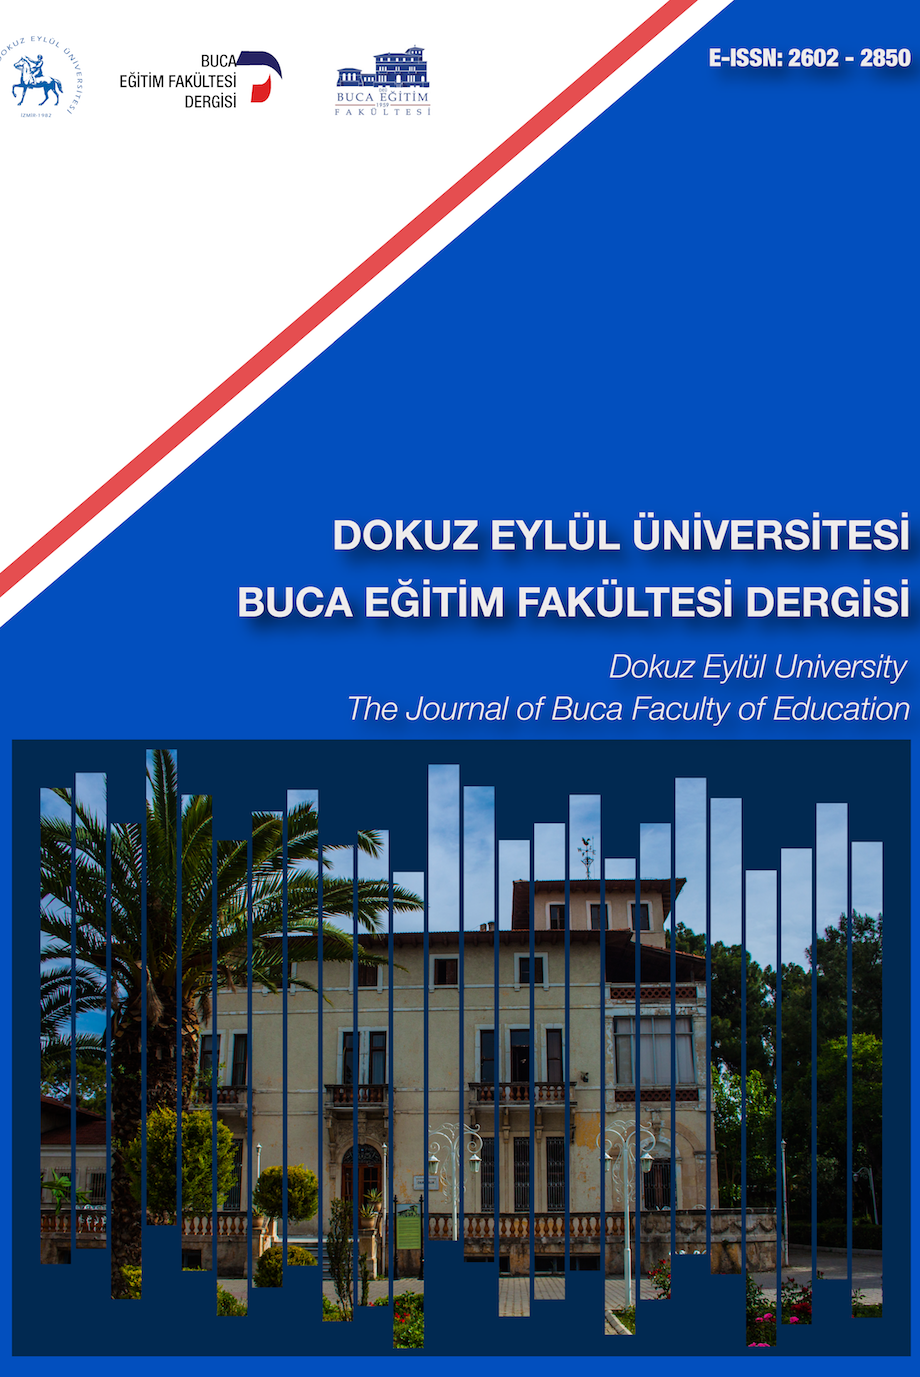 Buca Faculty of Education Journal